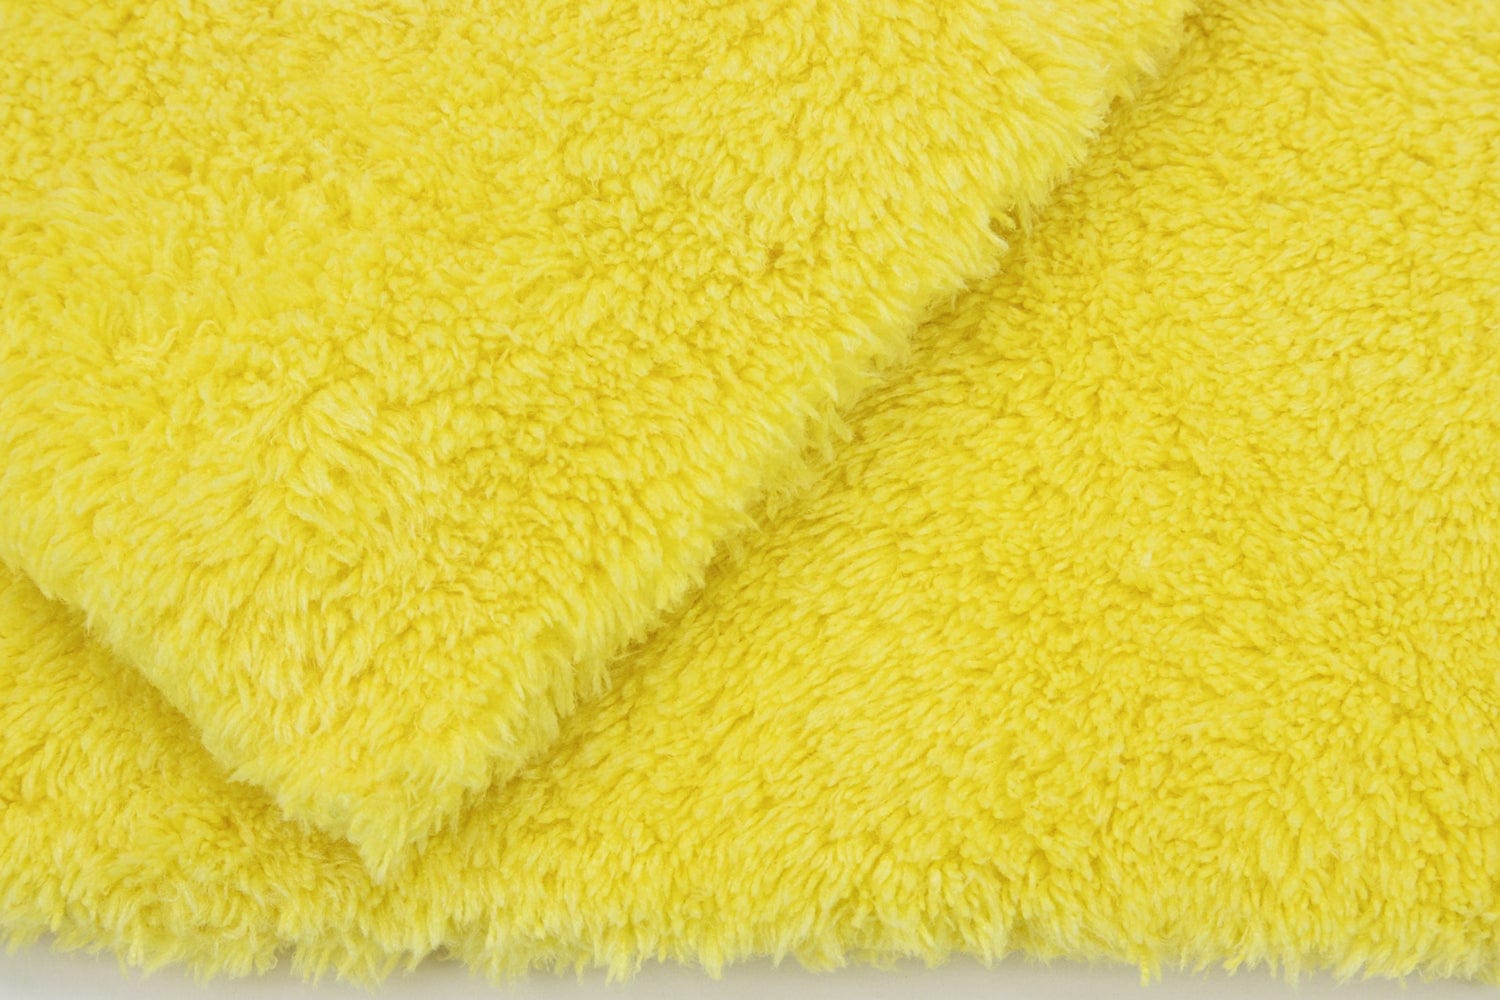 Autofiber Bulk Towel Yellow FULL CASE [Korean Plush 550] 550gsm 16"x16" - 75/case